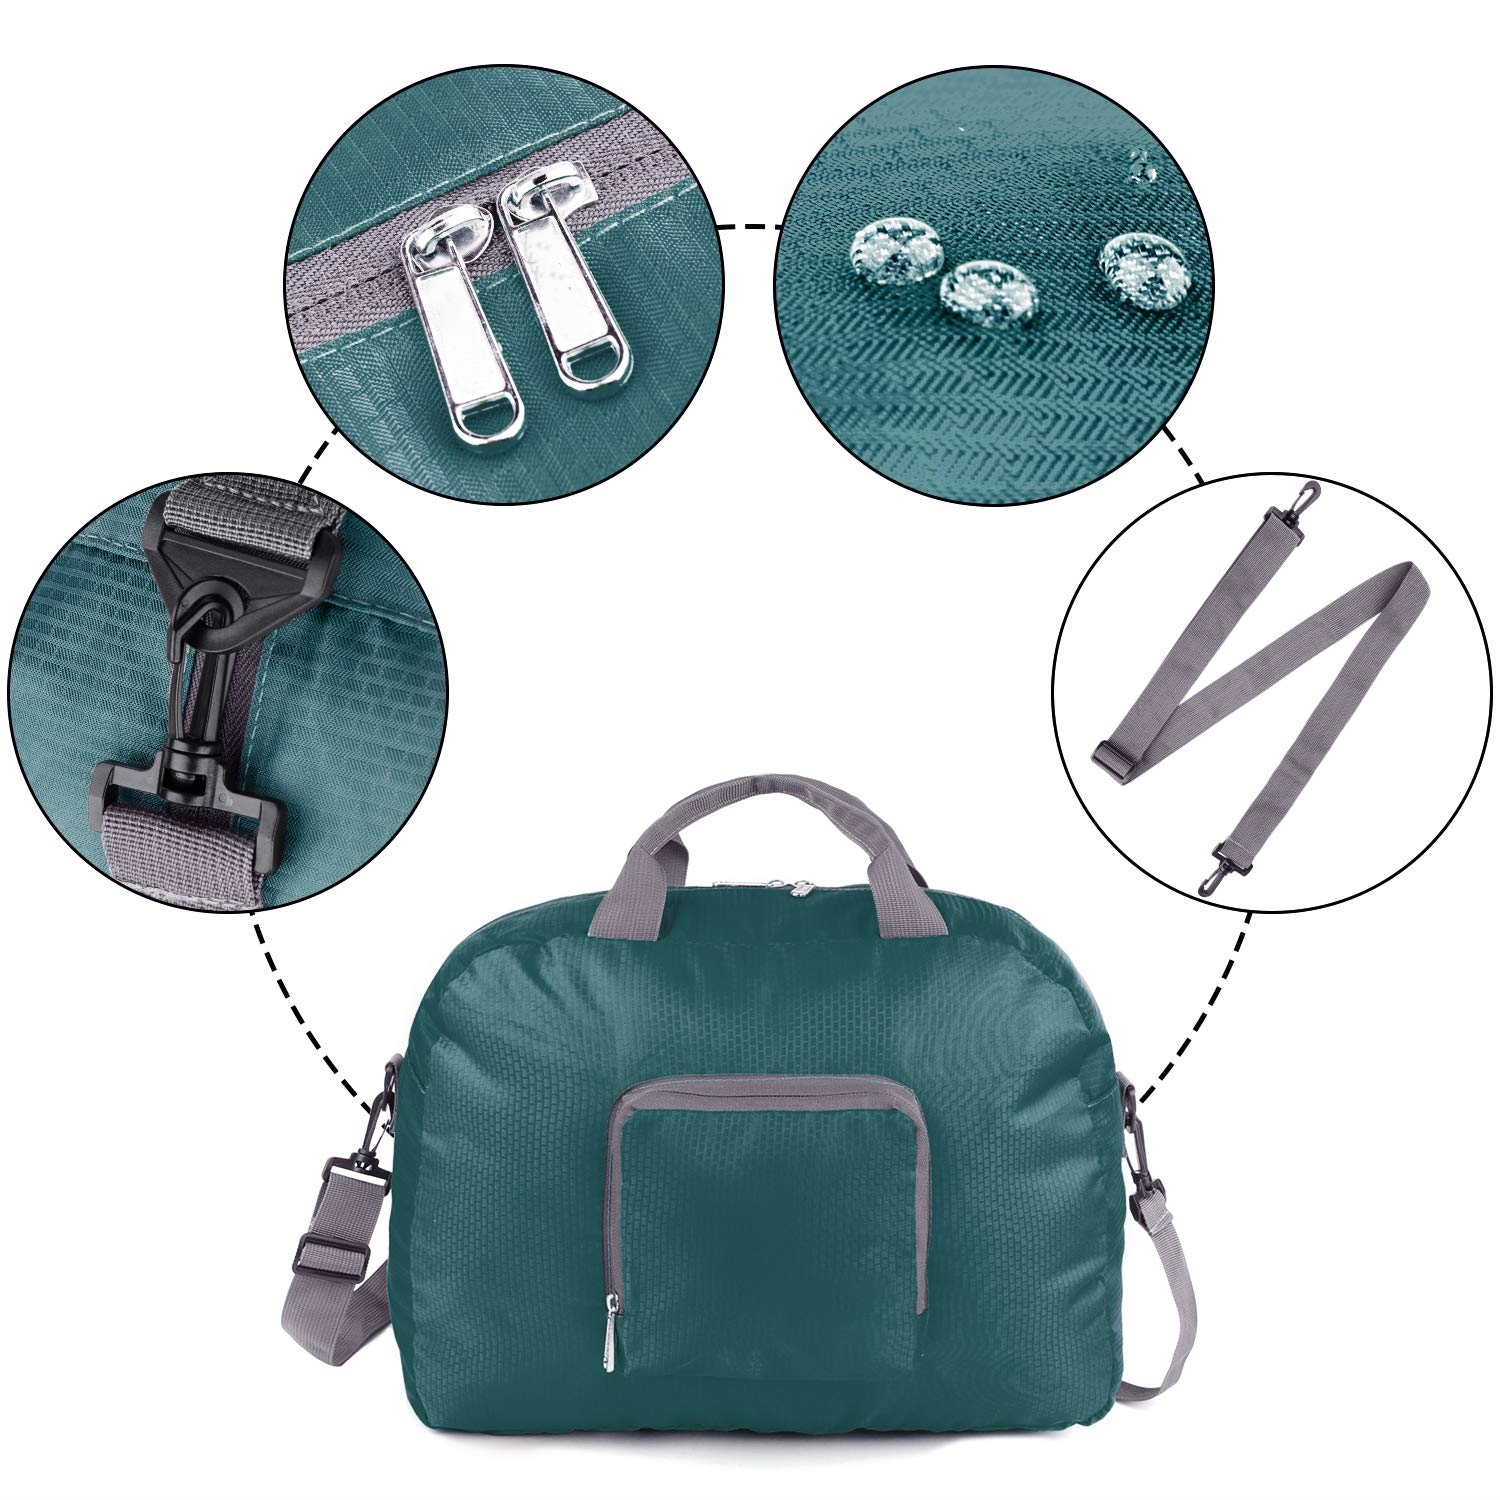 Foldable Travel Duffel Bag Product Details